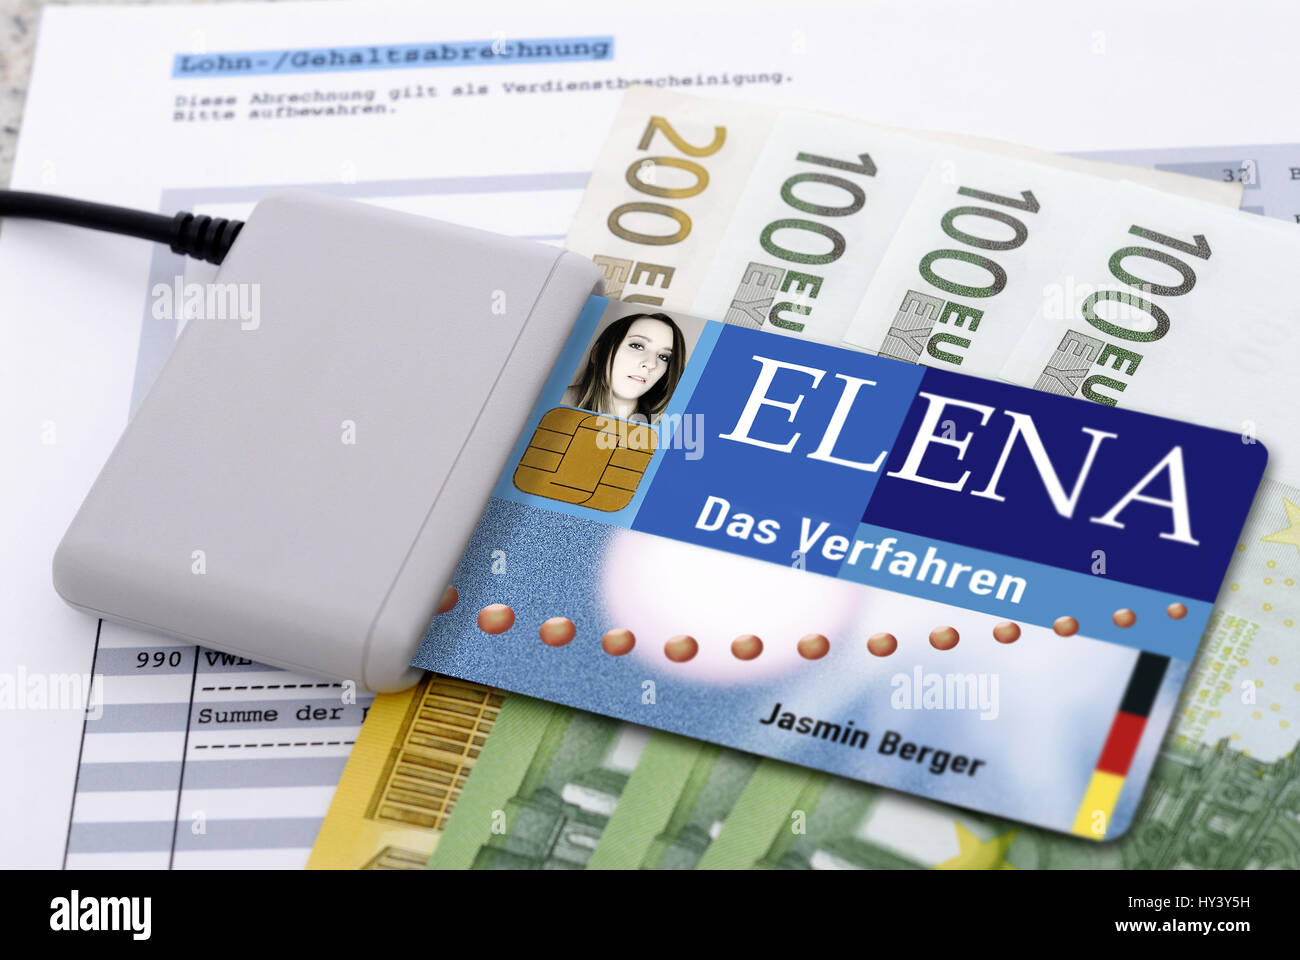 Elena, electronic reddito prova, gruppo di immagini, , elektronischer Einkommensnachweis , Bildmontage Foto Stock